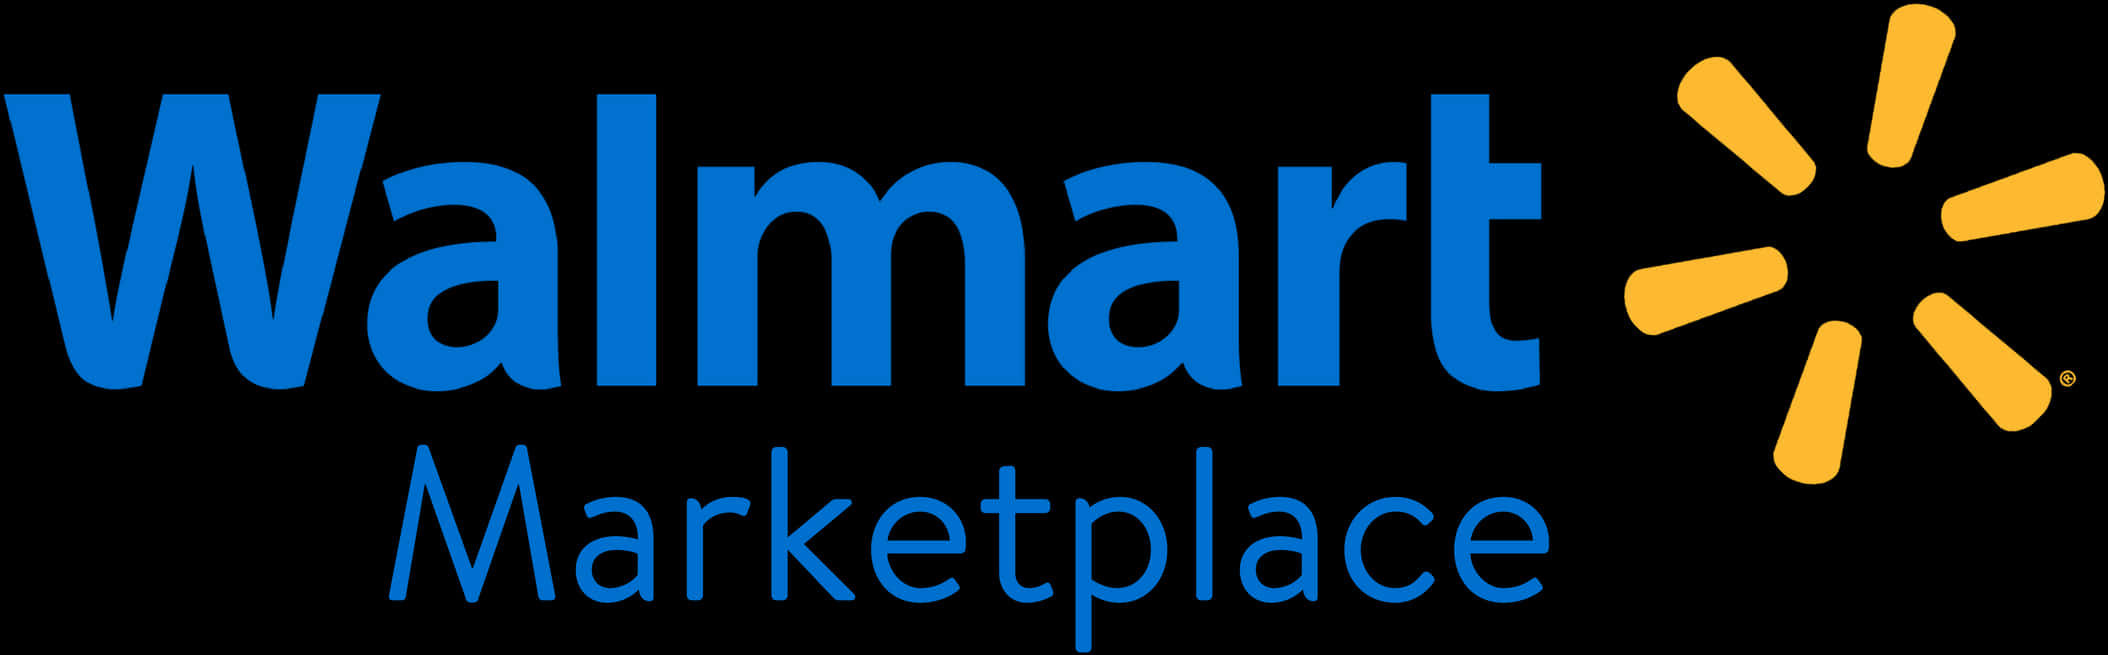 Walmart Marketplace Logo PNG image